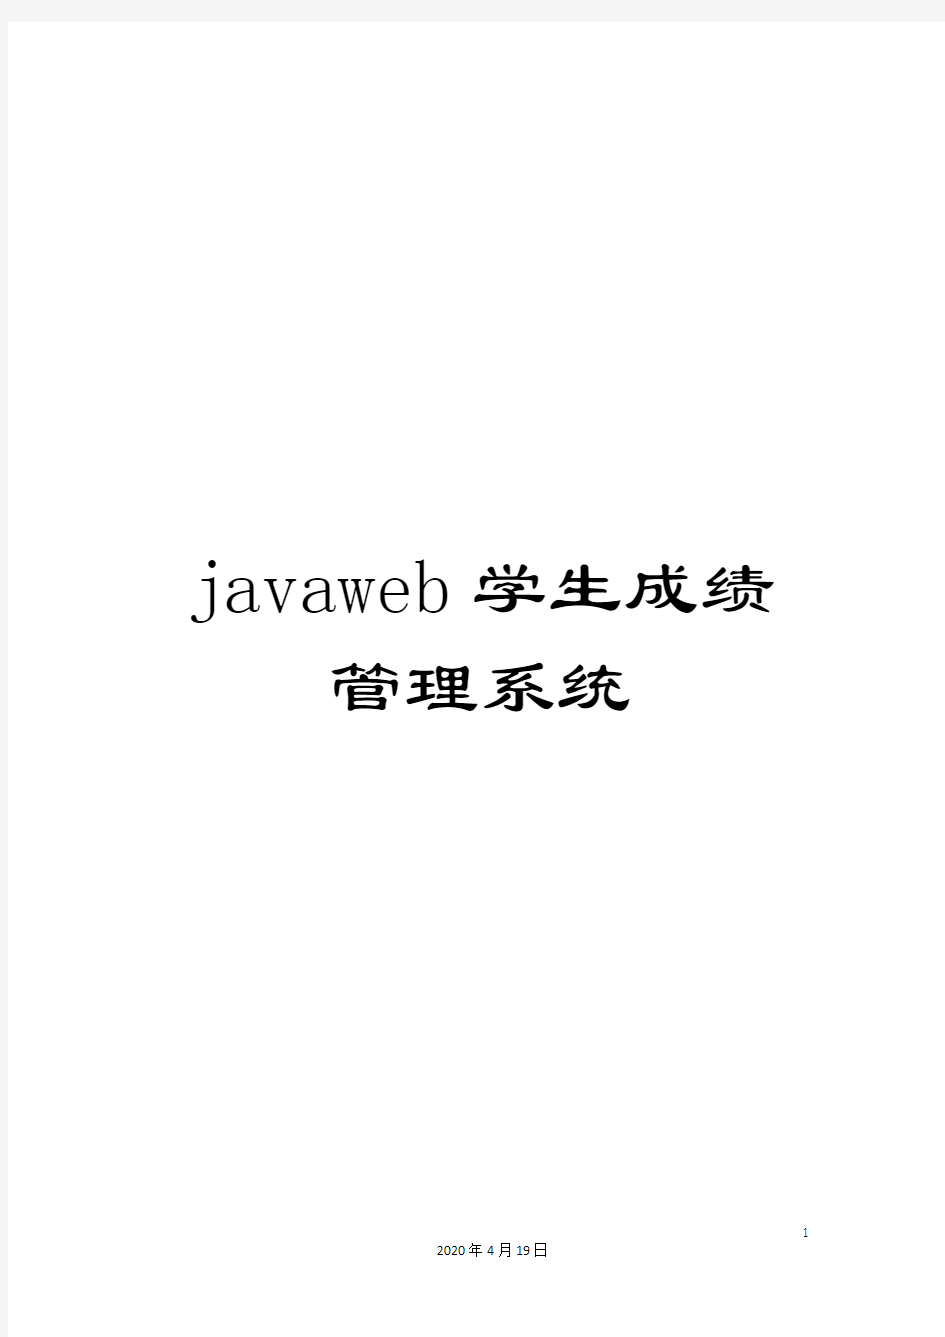 javaweb学生成绩管理系统